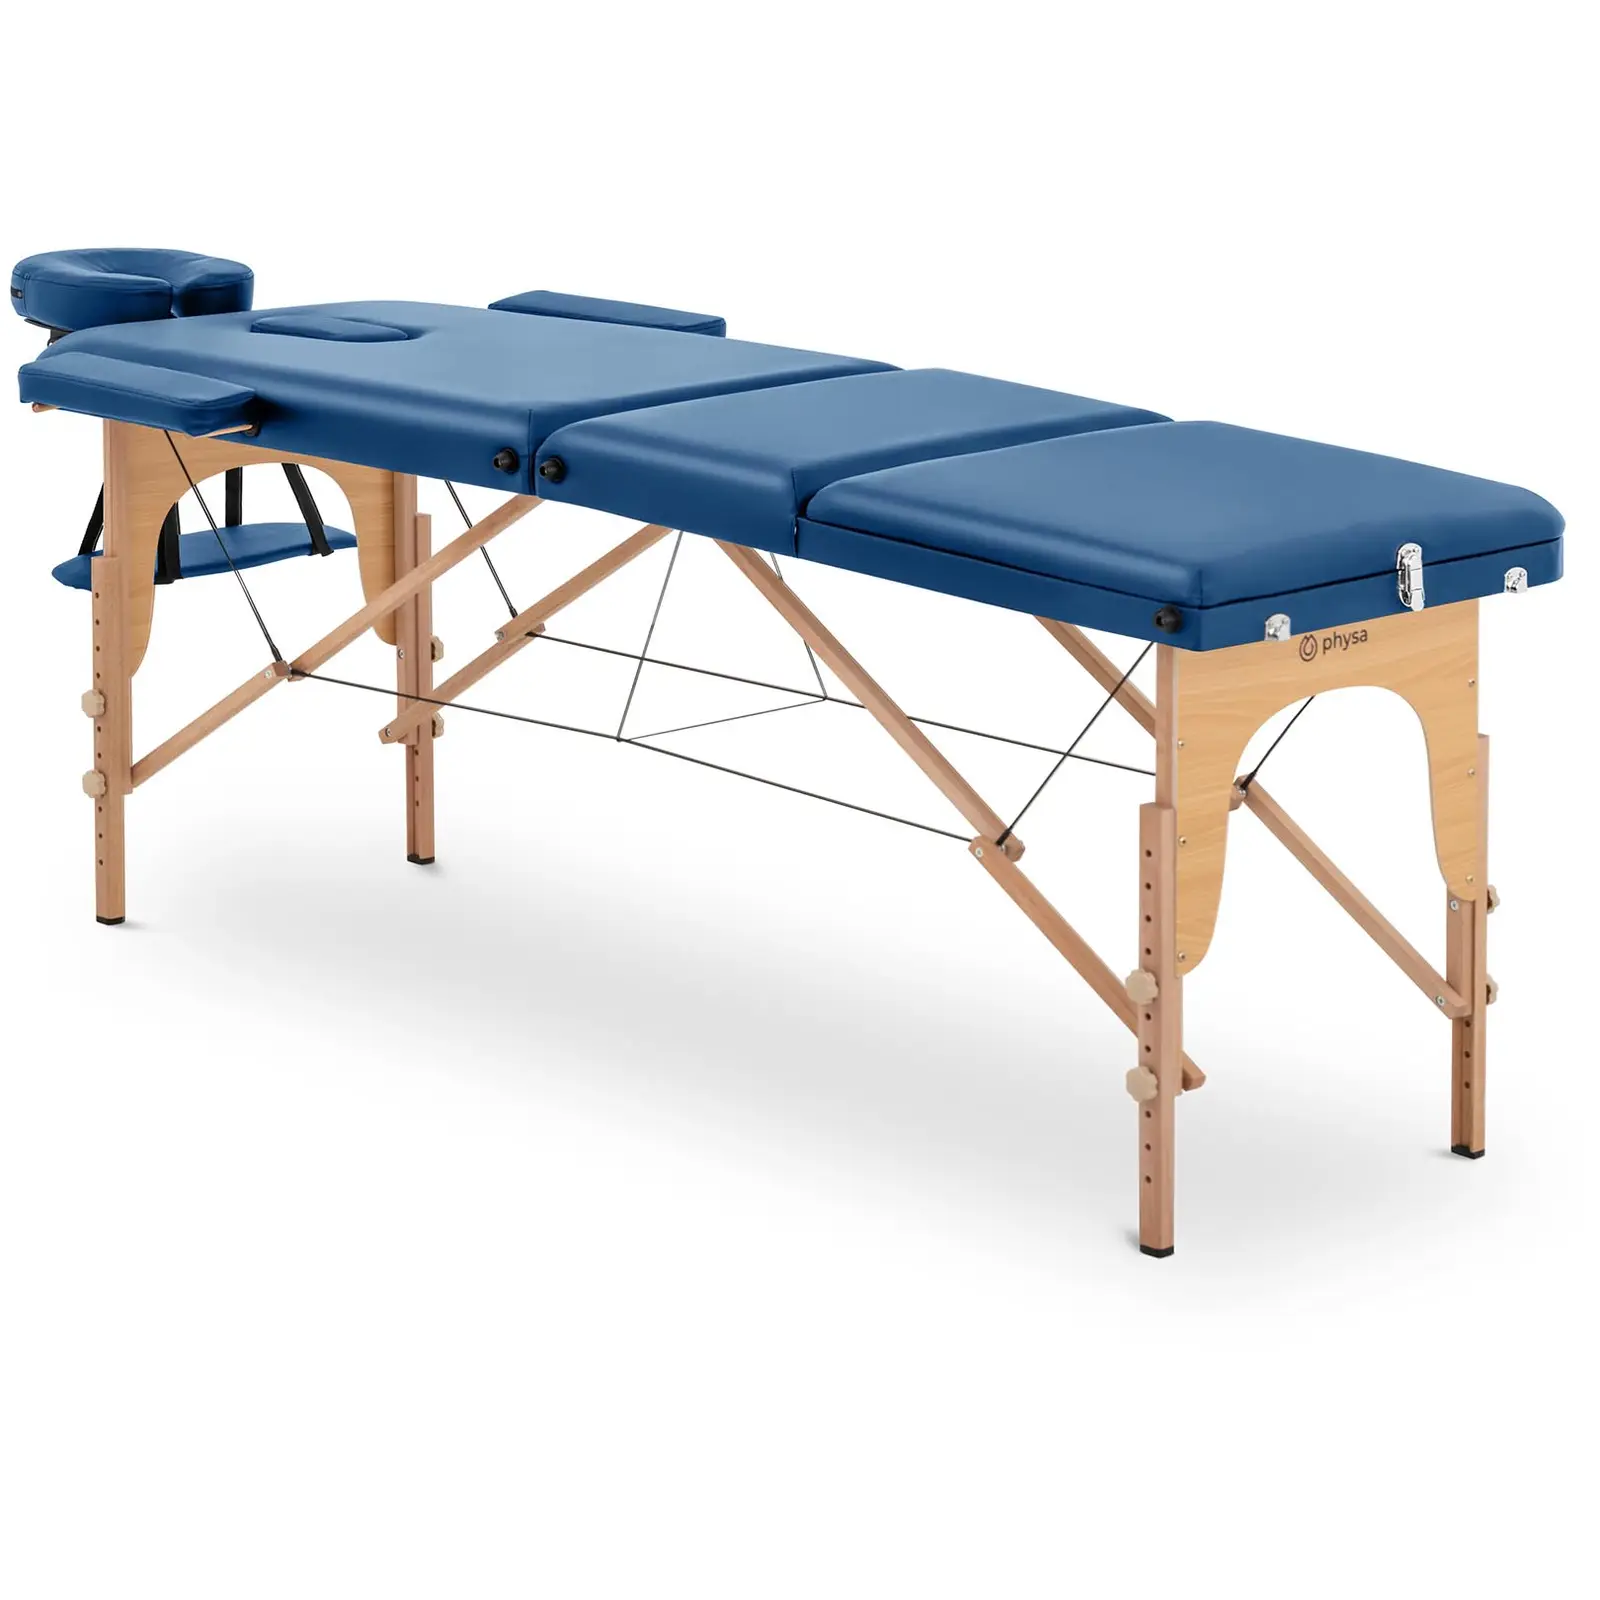 Hopfällbar massagebänk - 185 x 60 x 60-85 cm - 227 kg - Blå